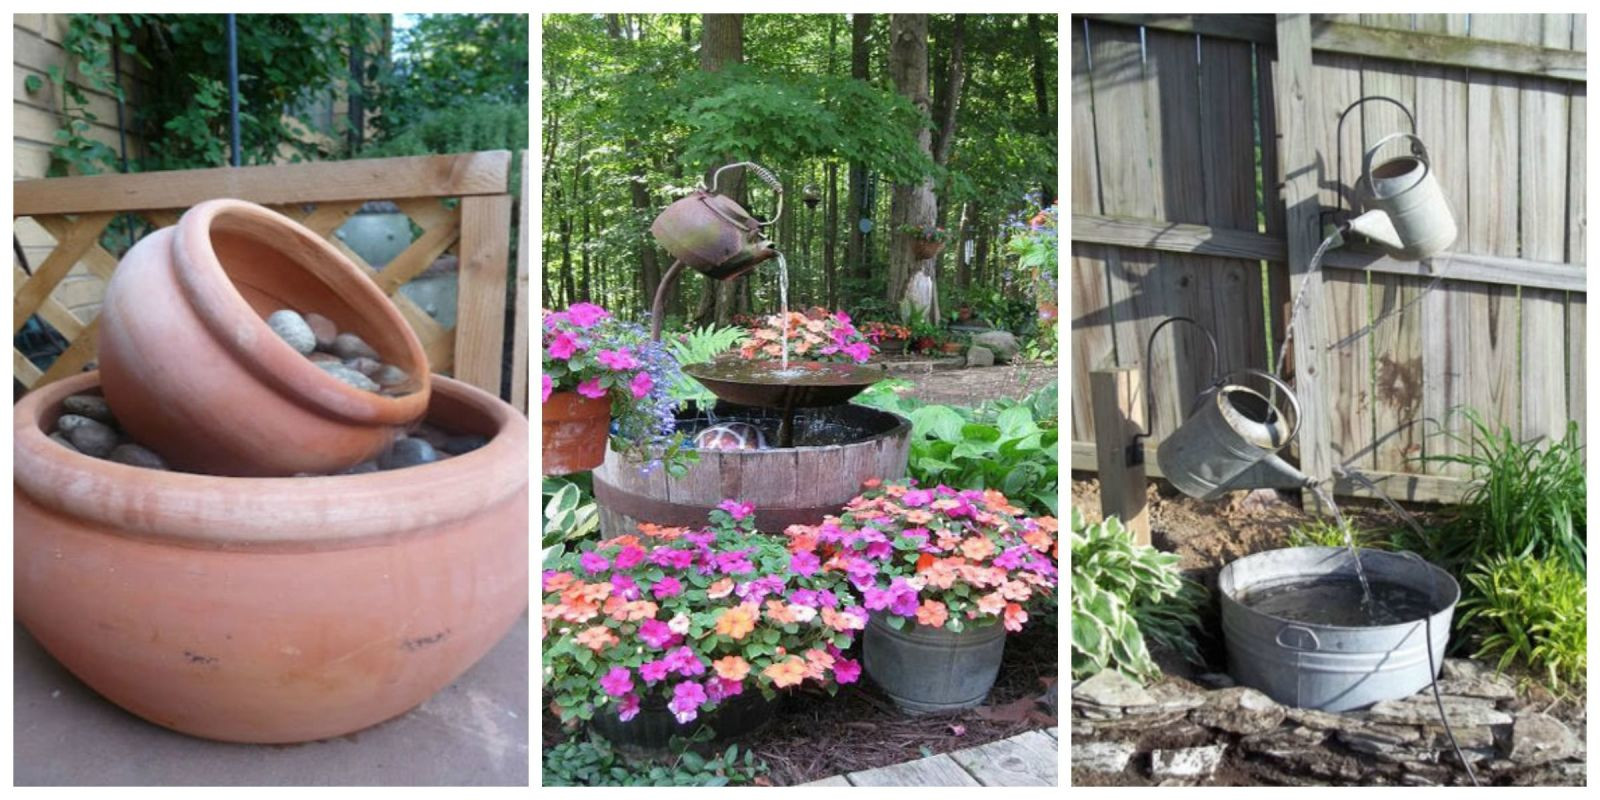 Best ideas about DIY Backyard Fountains
. Save or Pin 15 DIY Outdoor Fountain Ideas How To Make a Garden Now.